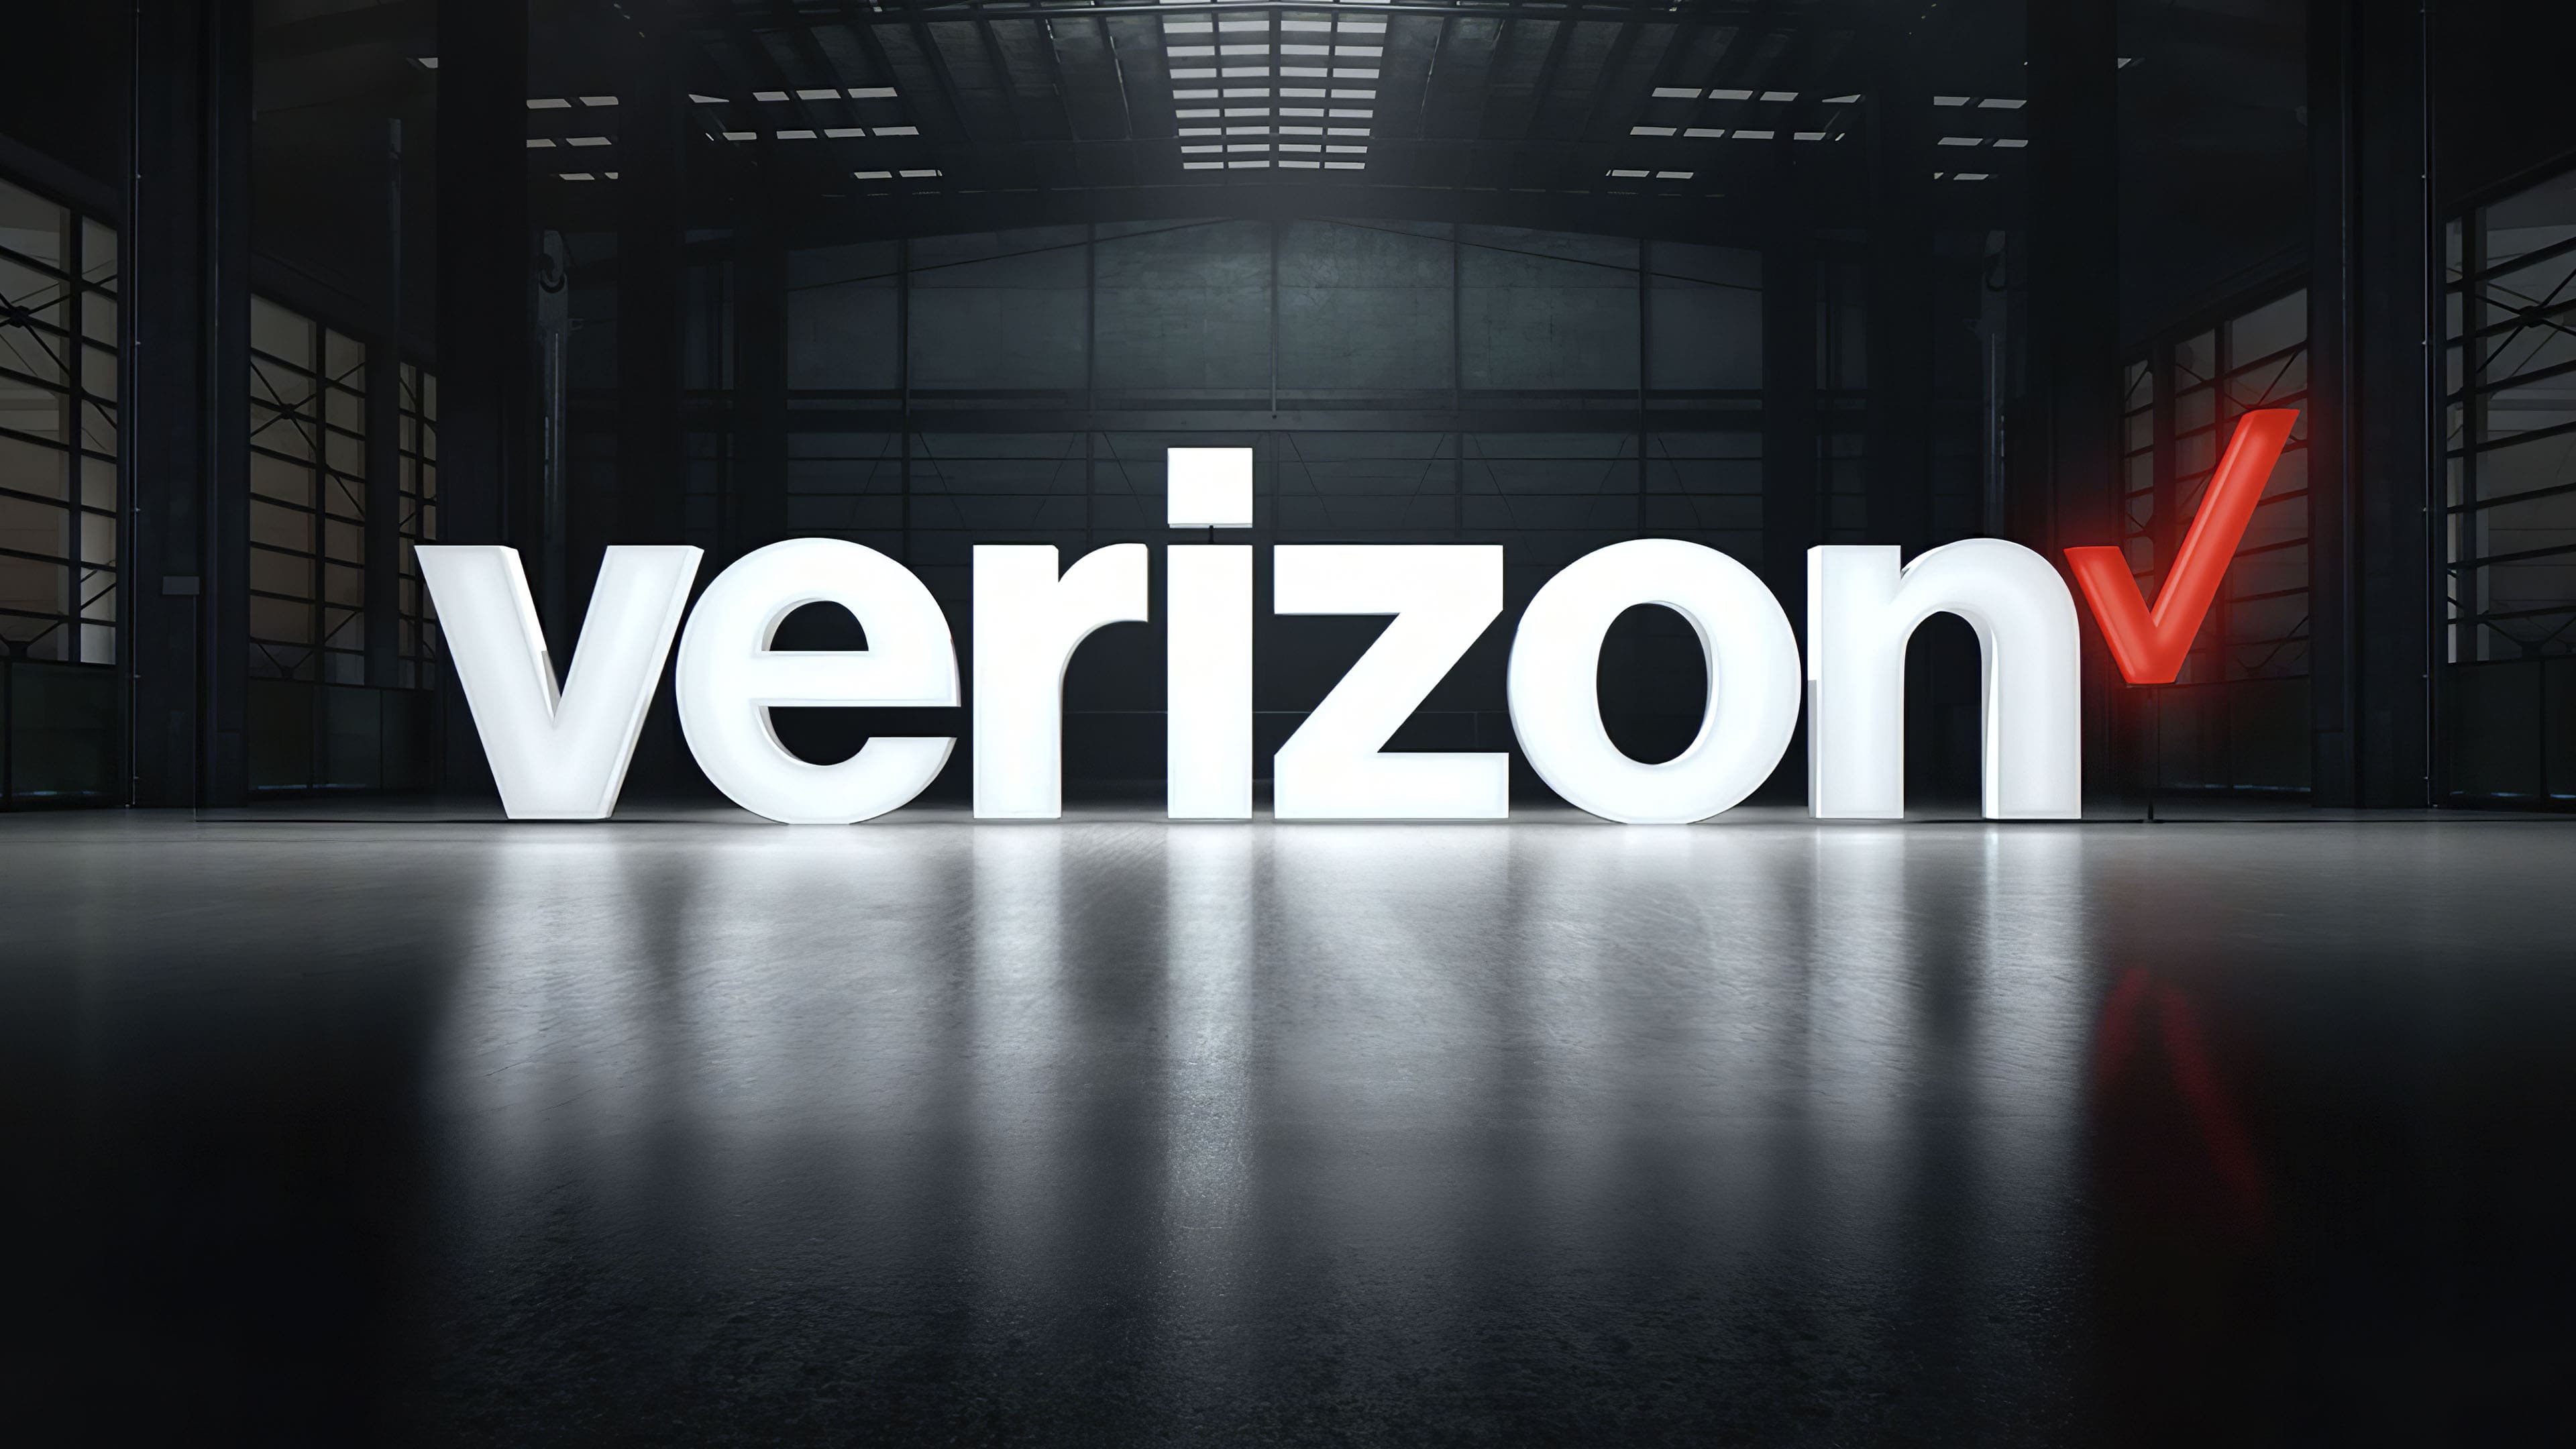 T me vzw up. Verizon. Verizon communications. Verizon лого. Verizon communications logo.